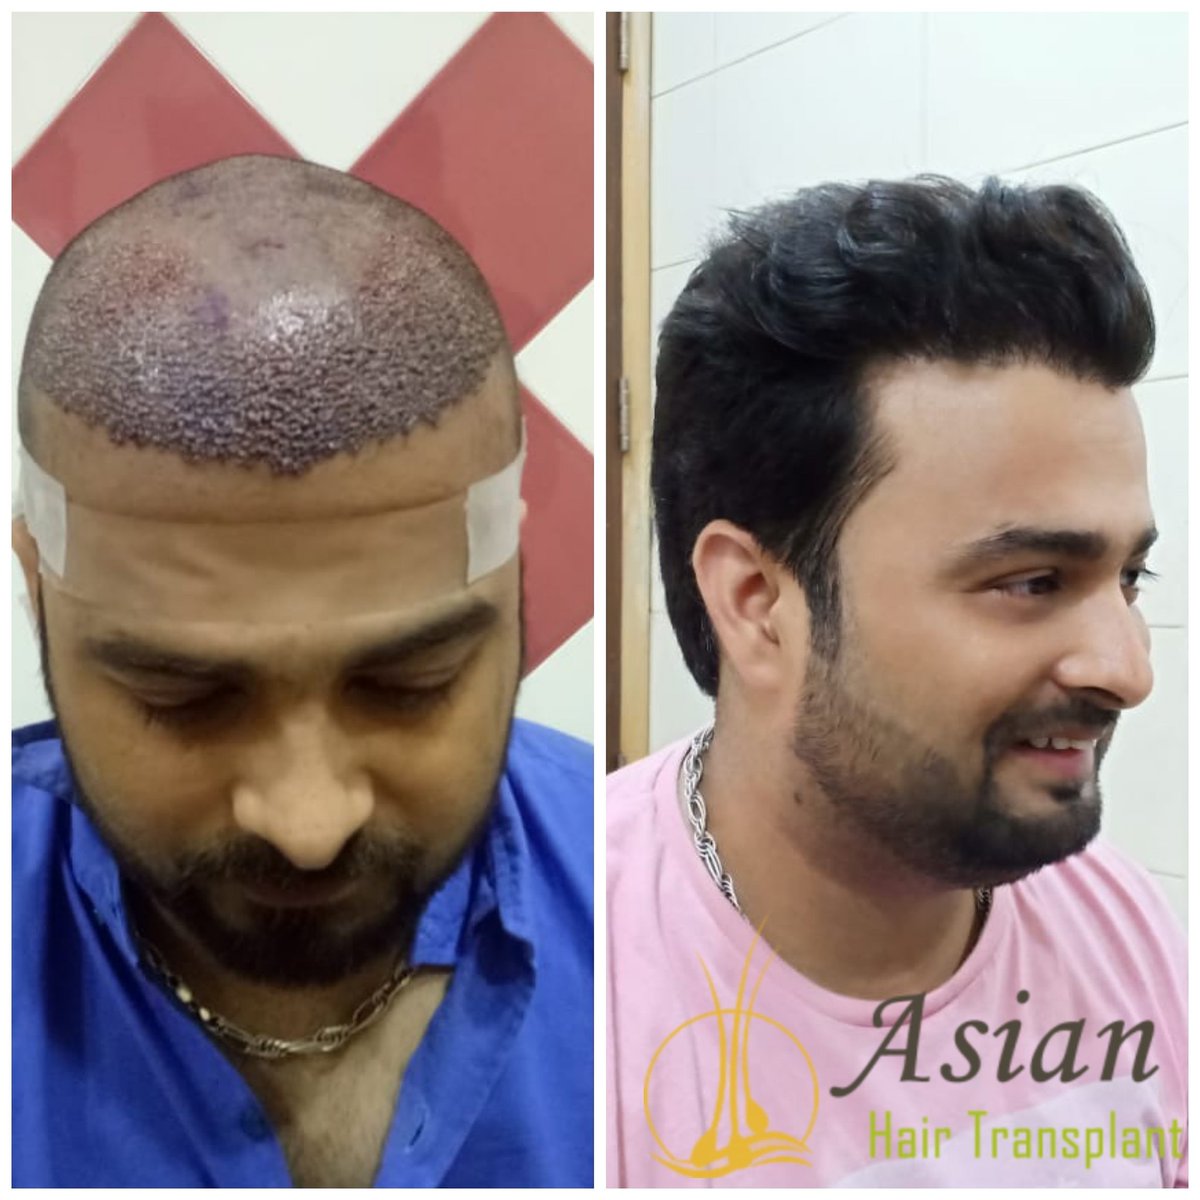 Asian Hair Transplant (@Asian_hair_) / Twitter